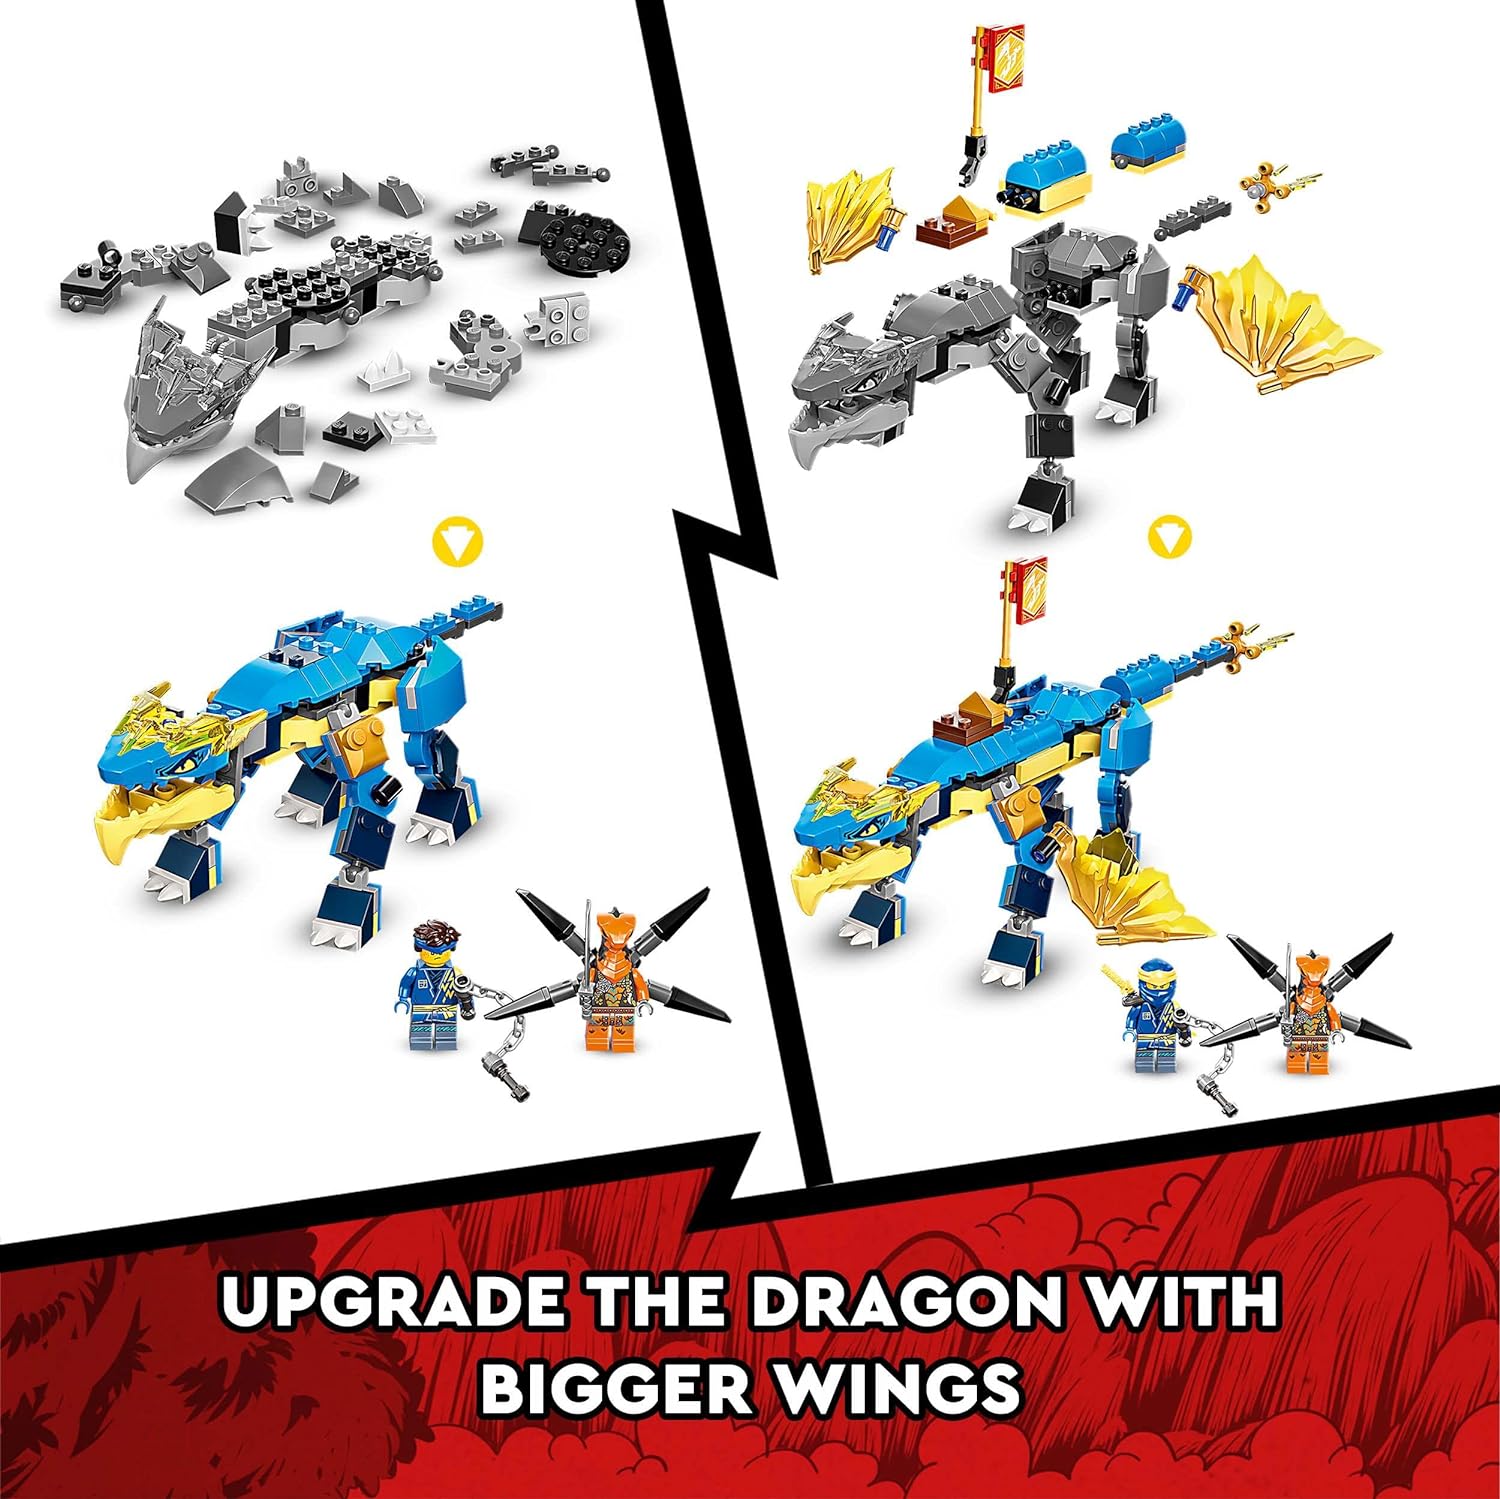 LEGO Ninjago Jay’s Thunder Dragon EVO Building Kit for Ages 6+